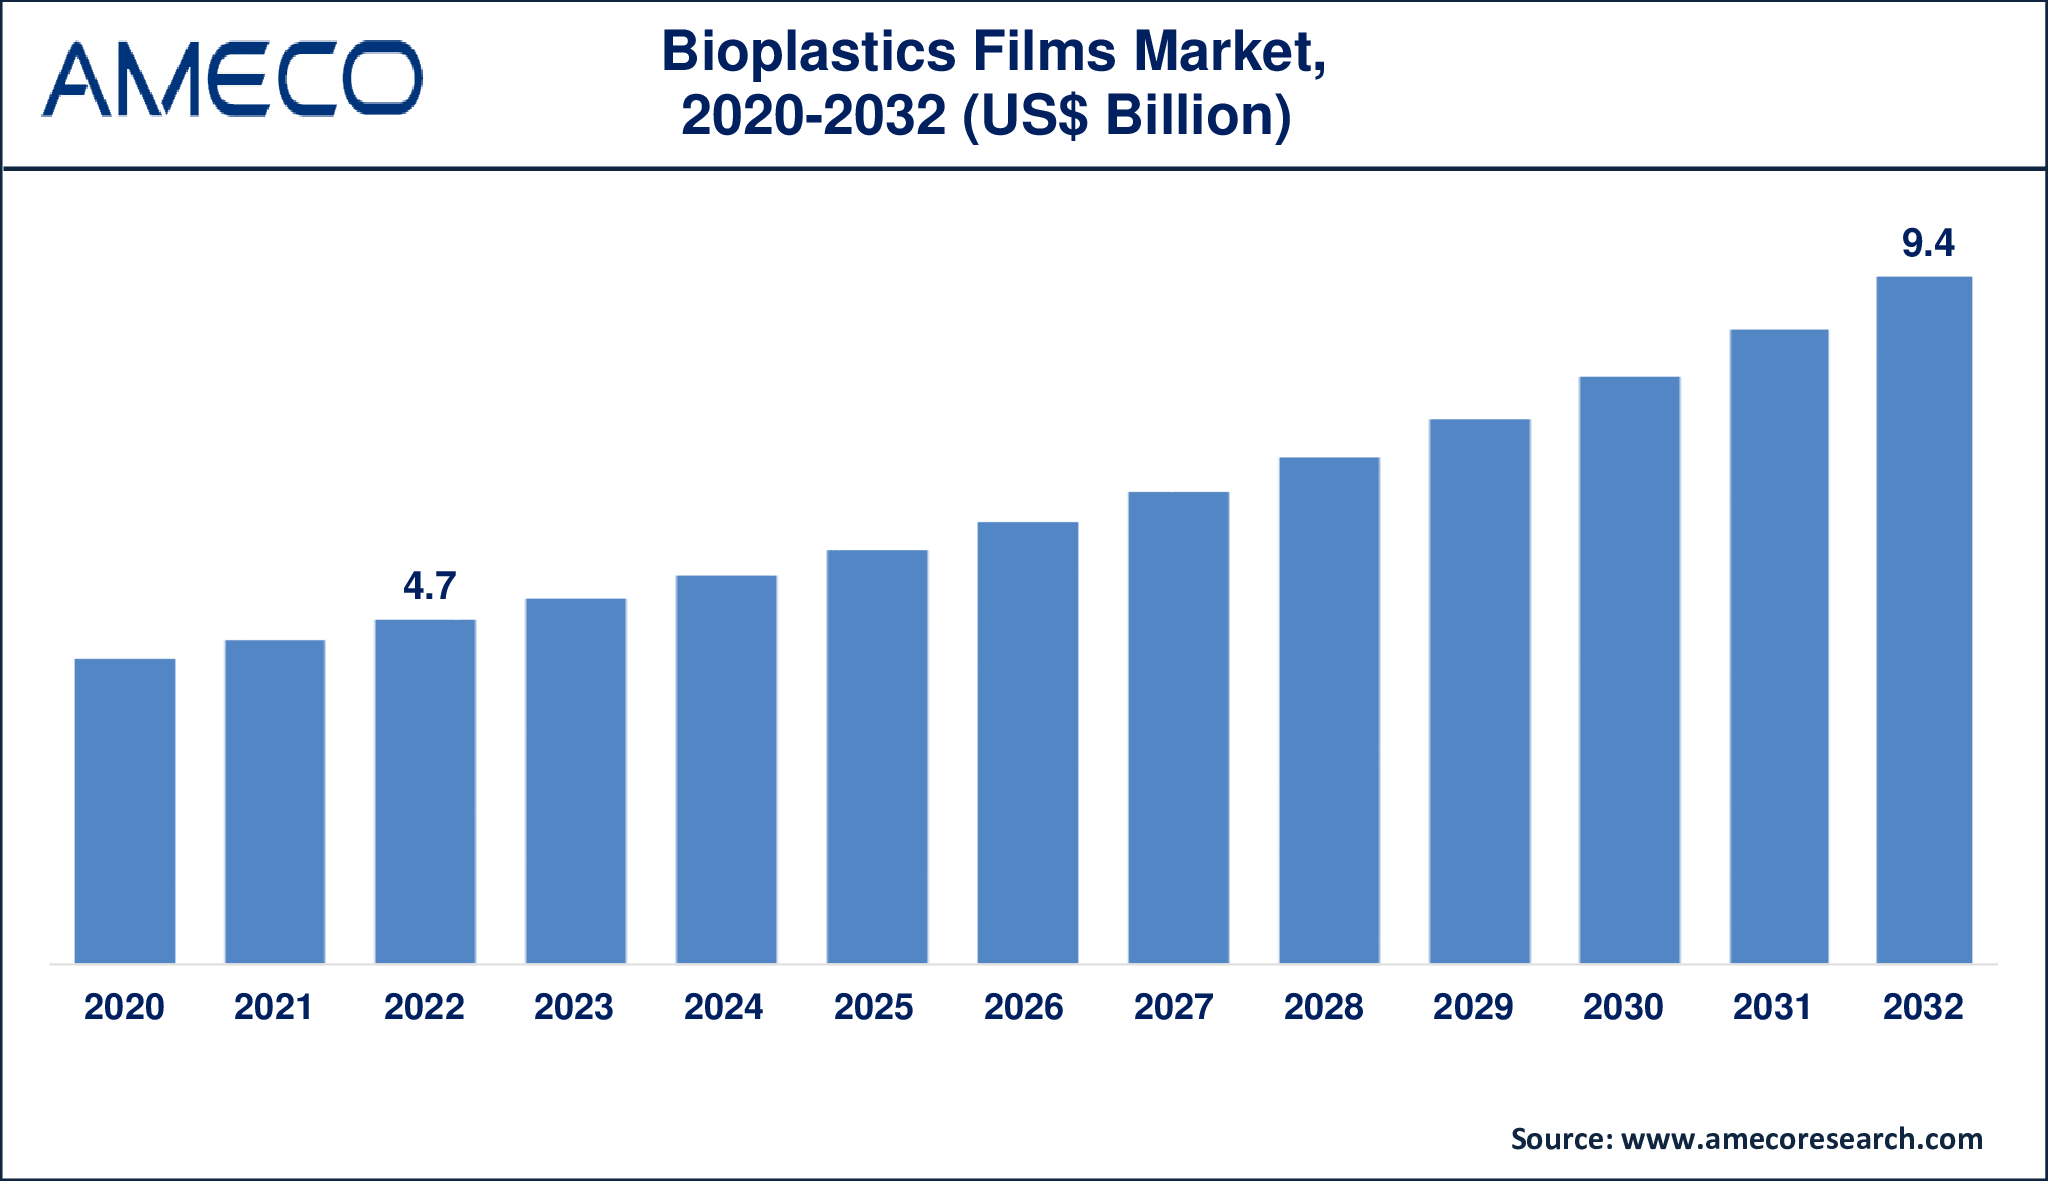 Bioplastics Films Market Trends